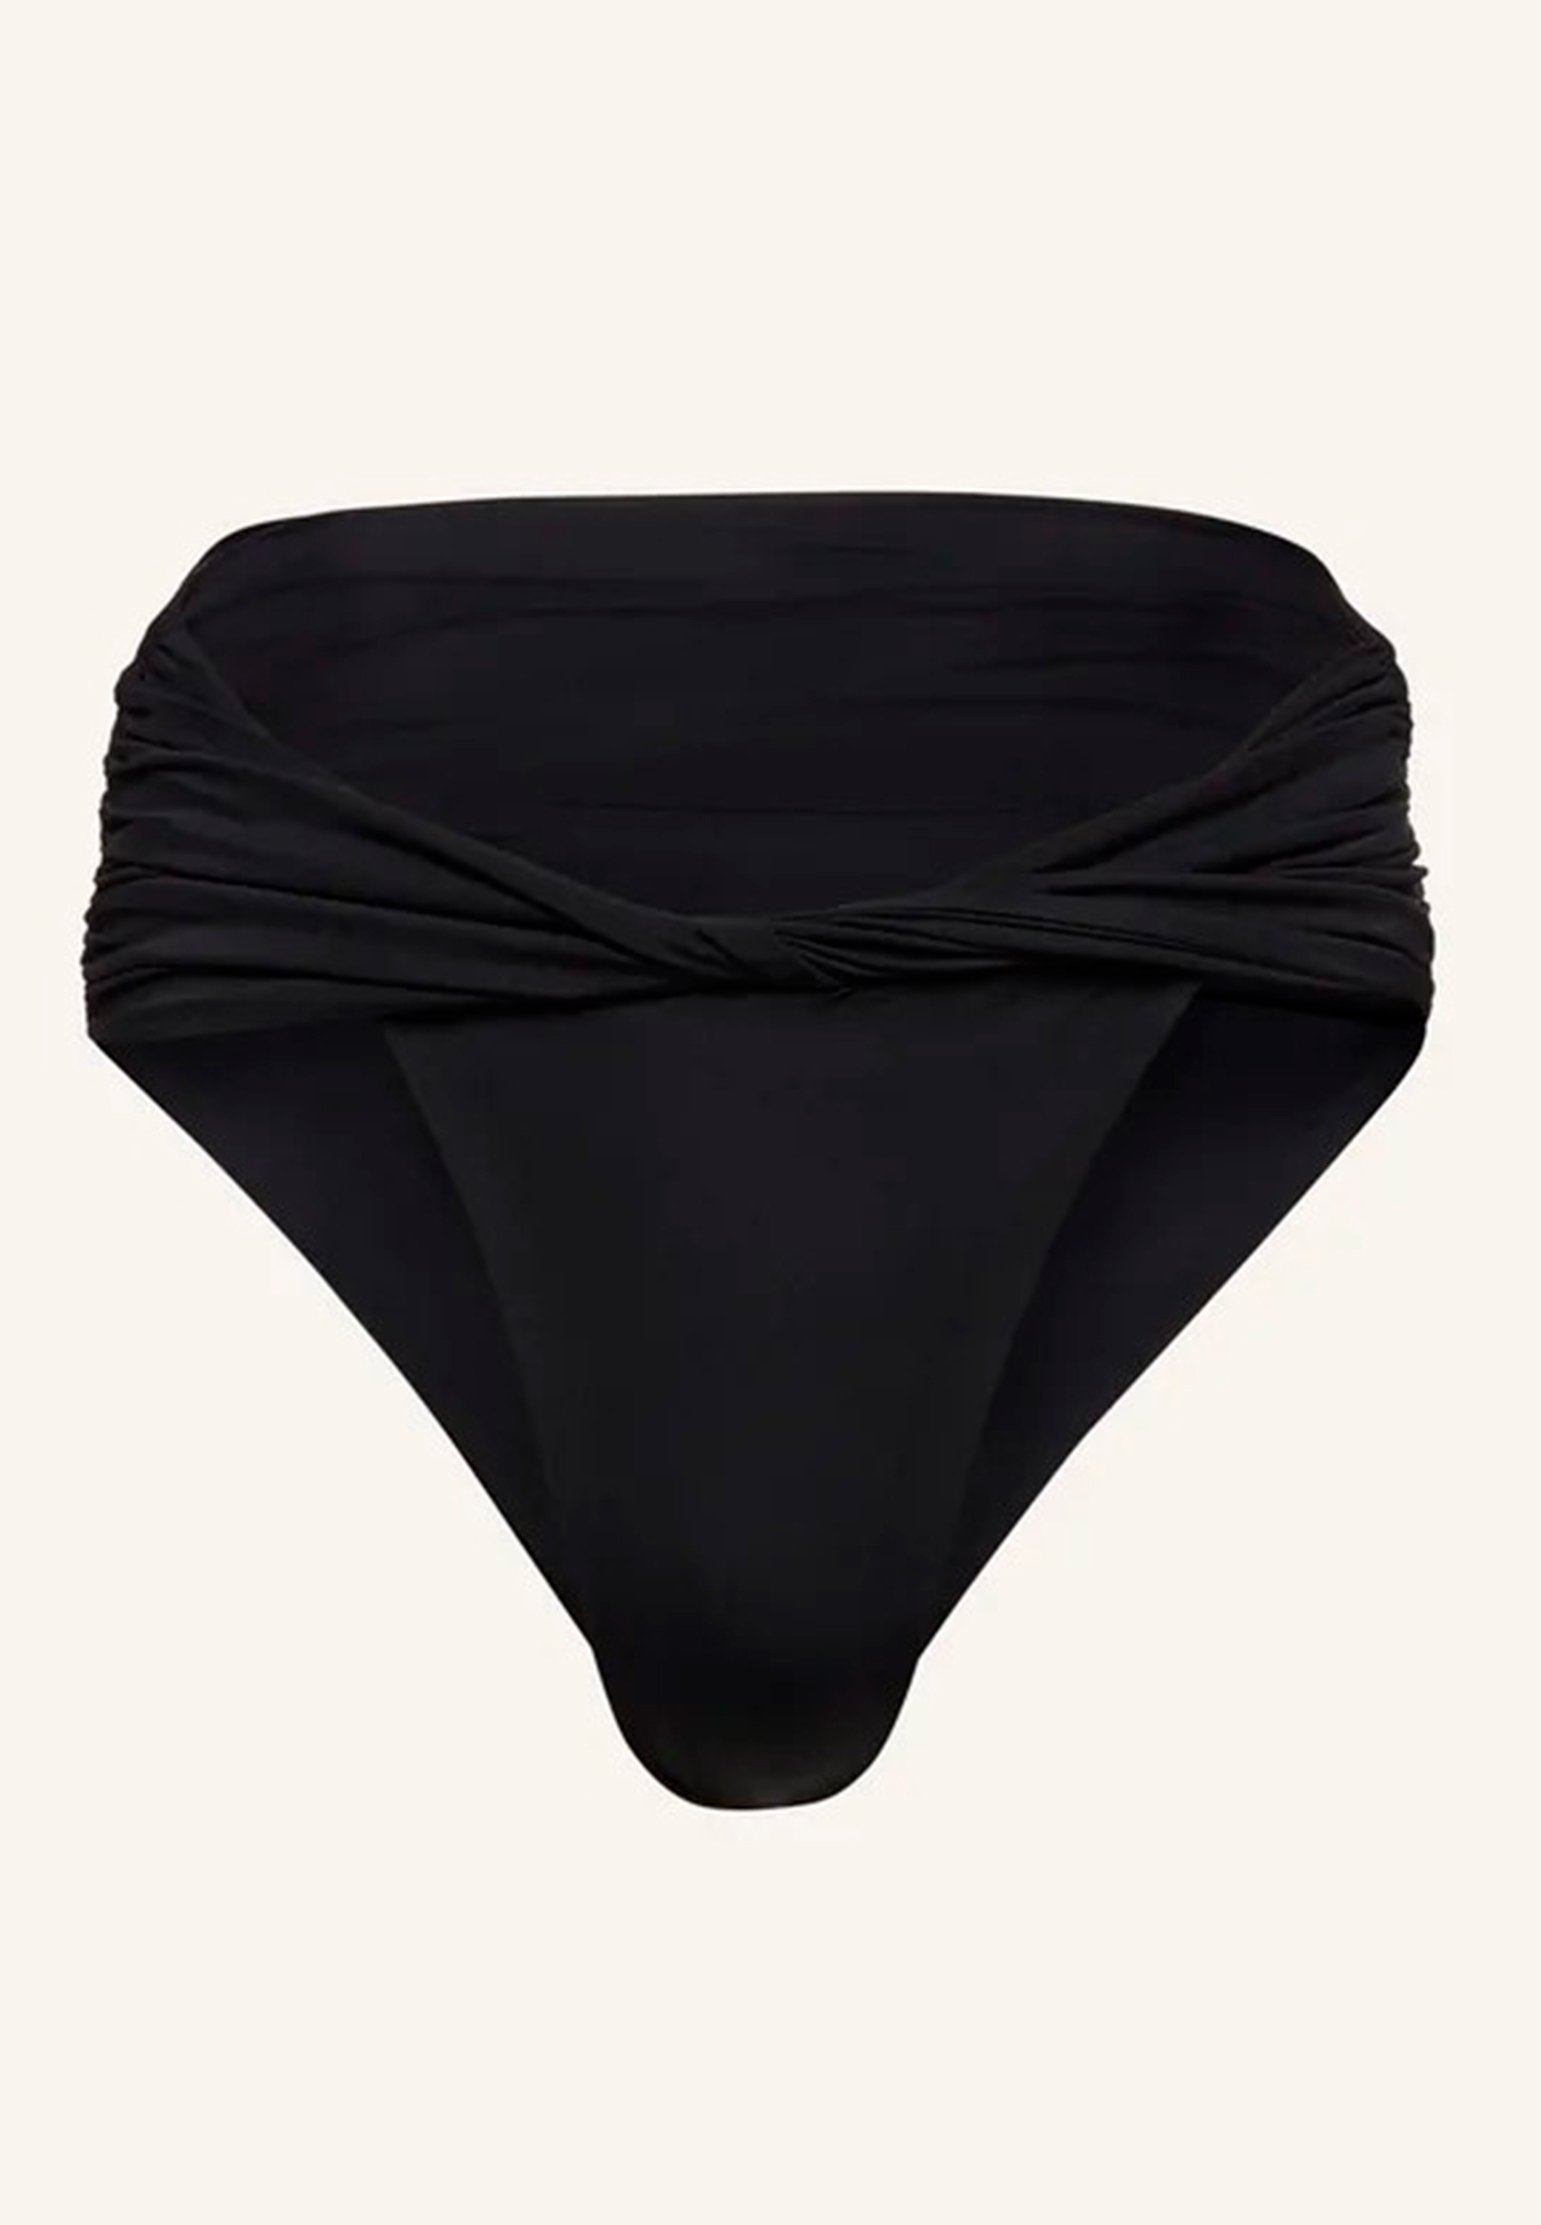 Bottom swim MAGDA BUTRYM Color: black (Code: 1378) in online store Allure